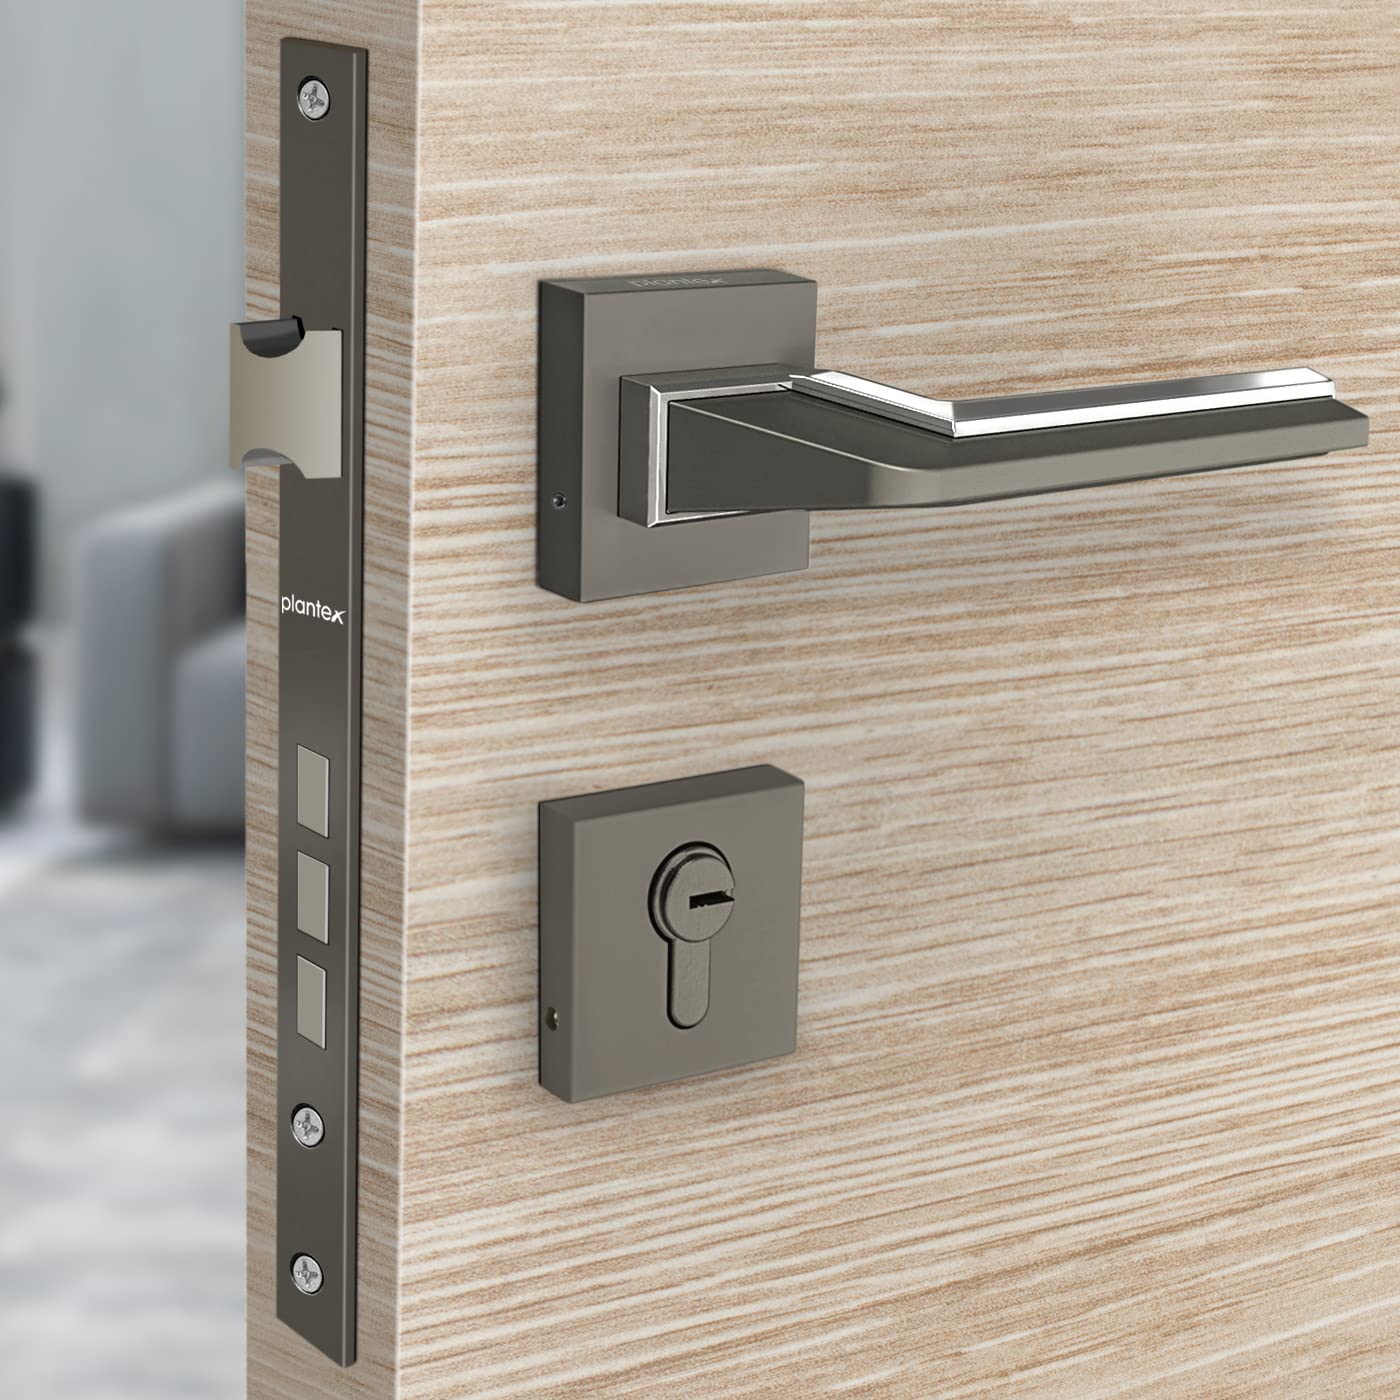 Plantex Door Lock Two PIS 7 Inch Handle Lock for Door 3 Keys/Mortise Lock for Home Office Hotel (Satin Black & Matt Finish)